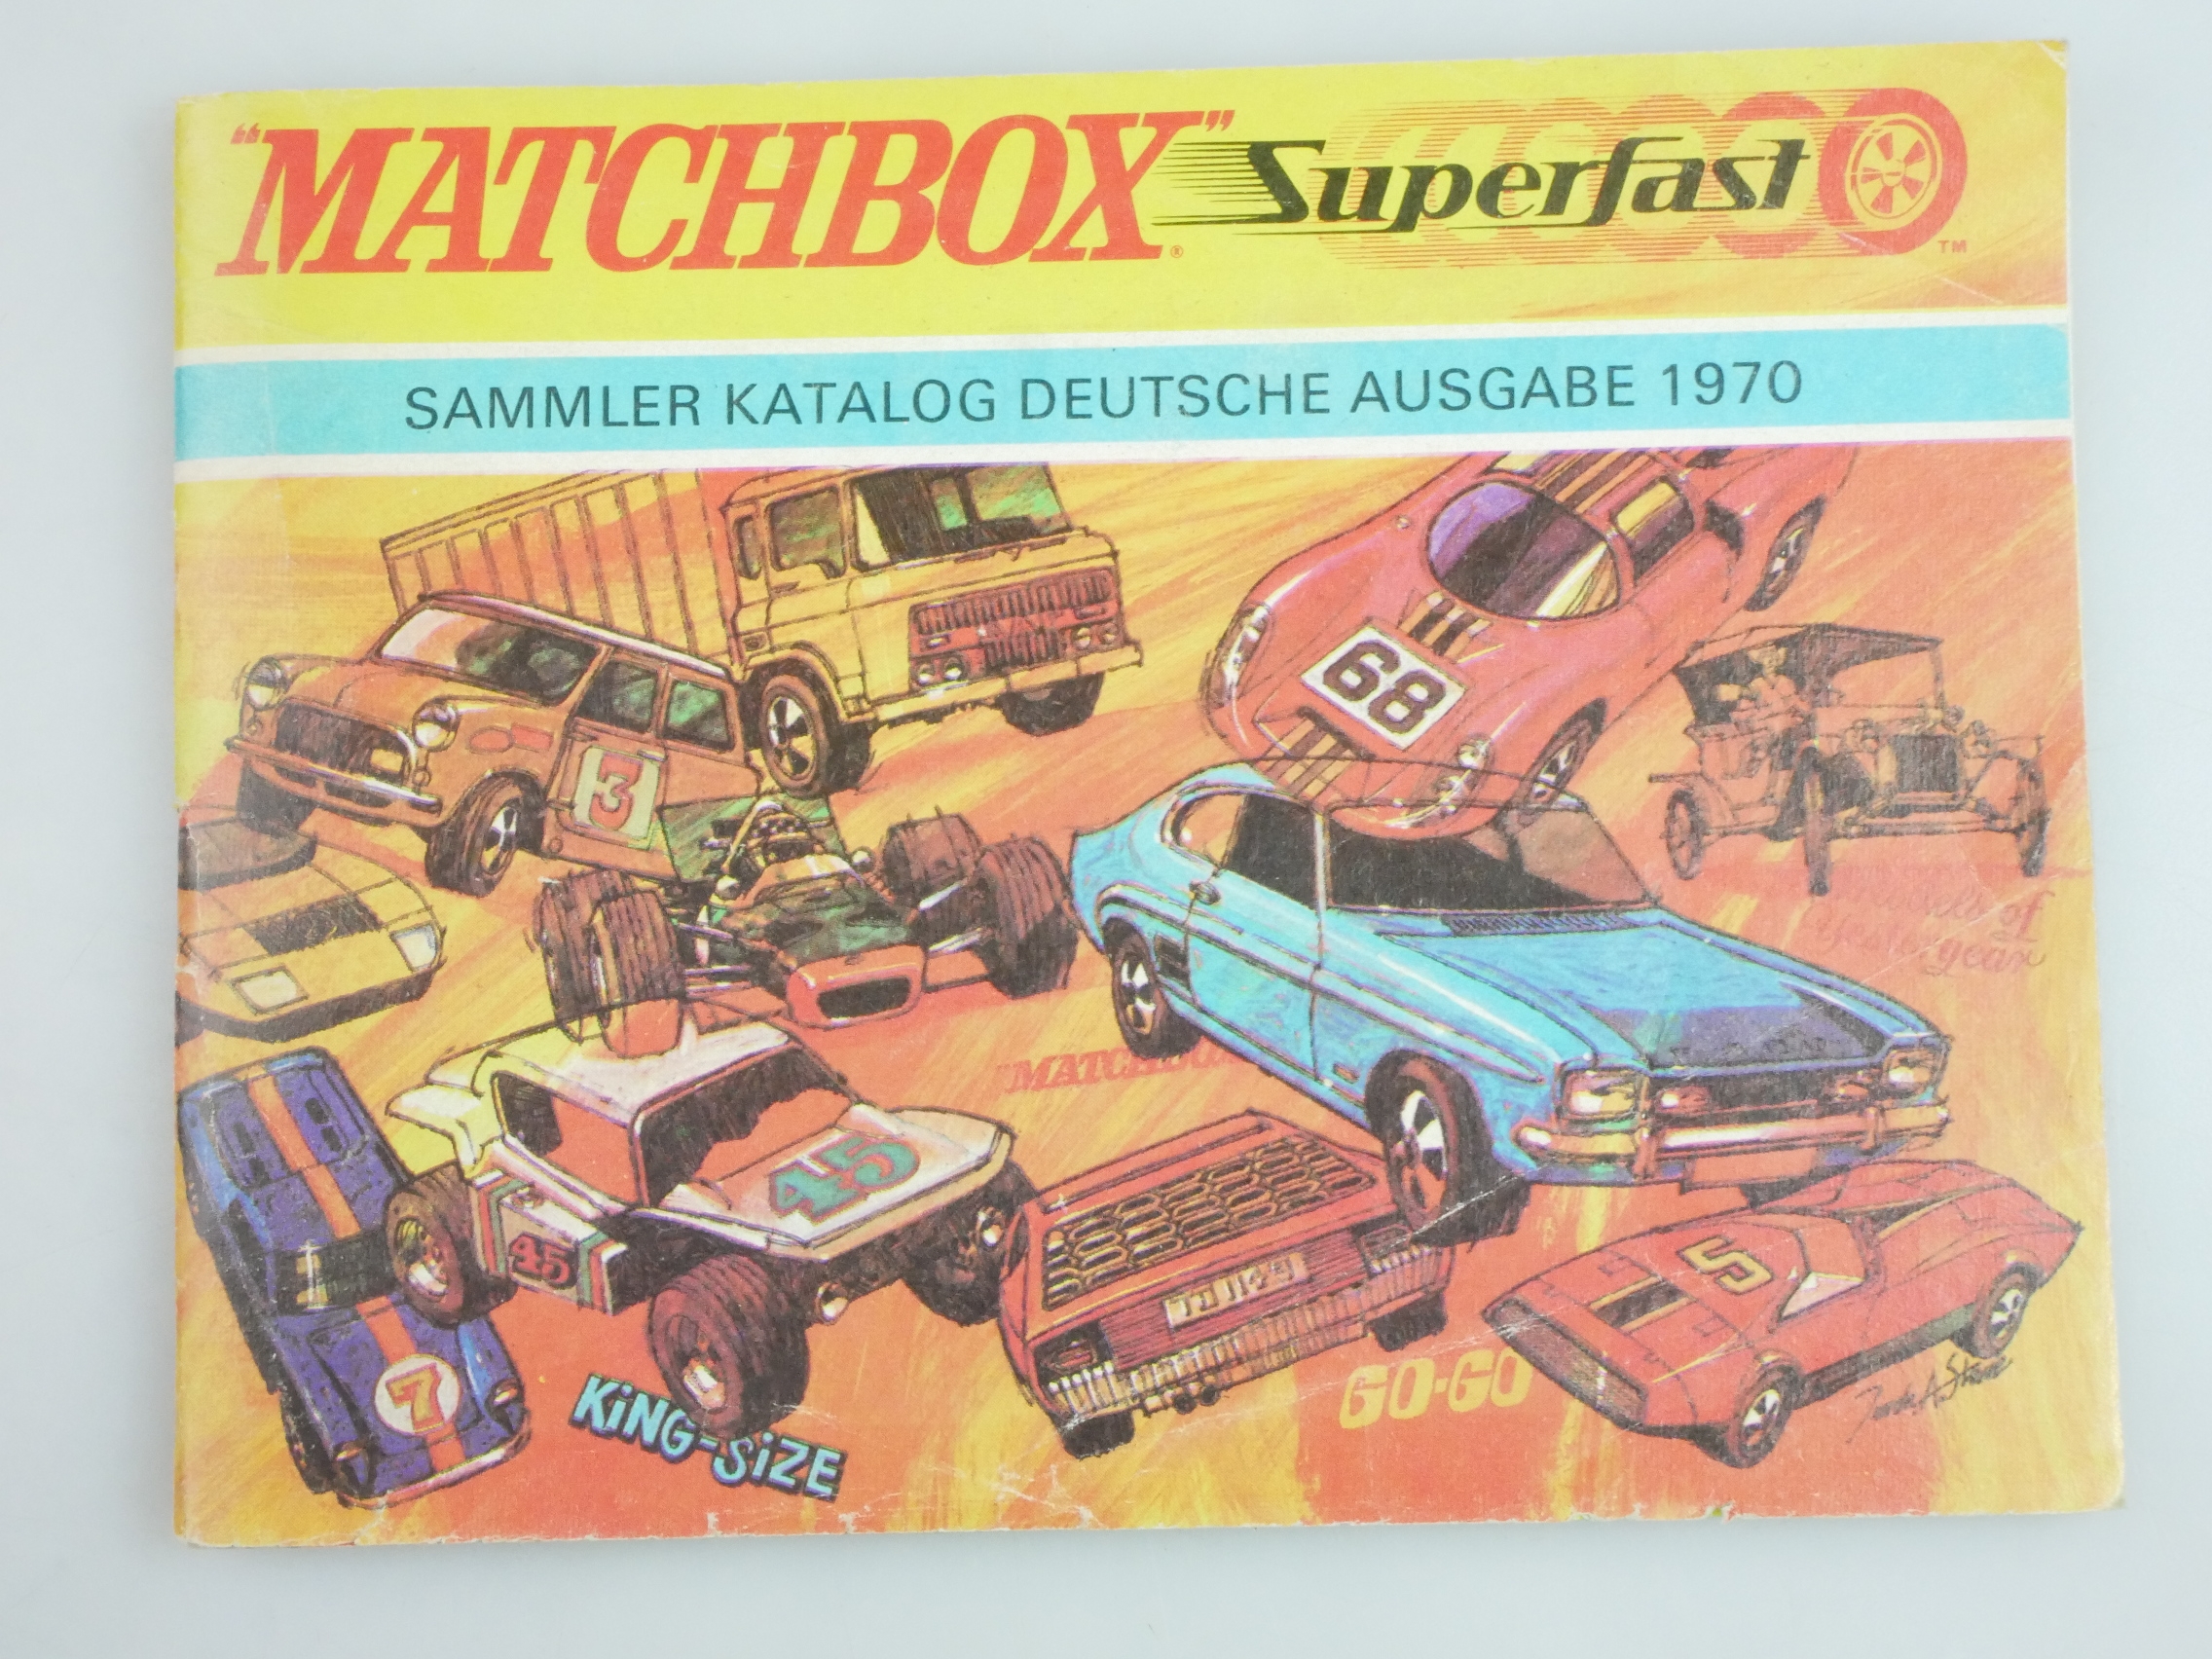 Matchbox Sammler Katalog Deutsche Ausgabe 1970 - 20948